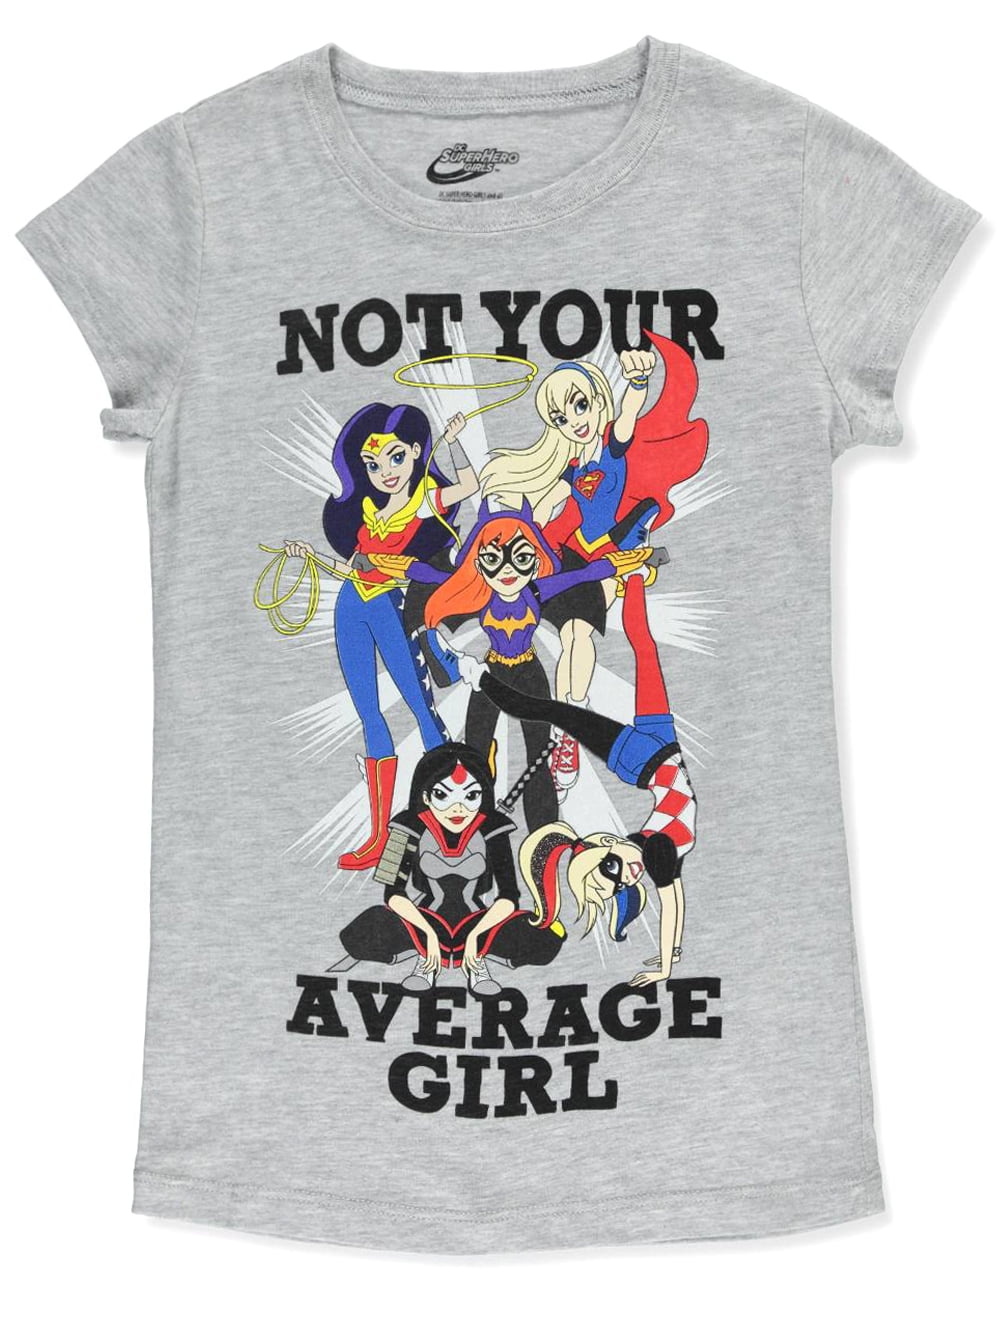 girls superhero tshirt